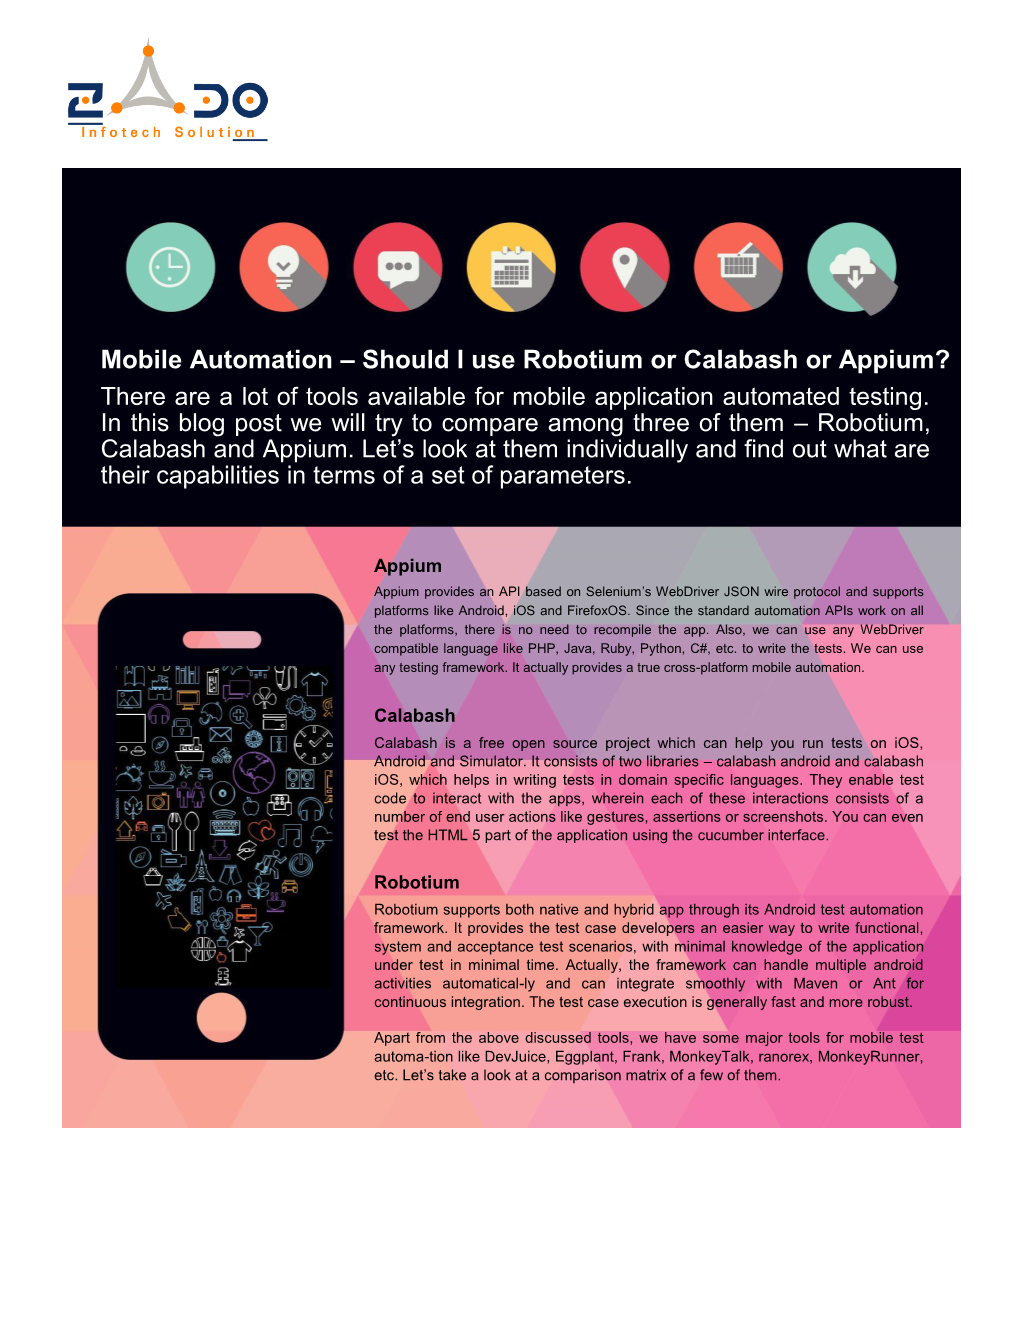 Mobile Automation – Should I Use Robotium Or Calabash Or Appium?